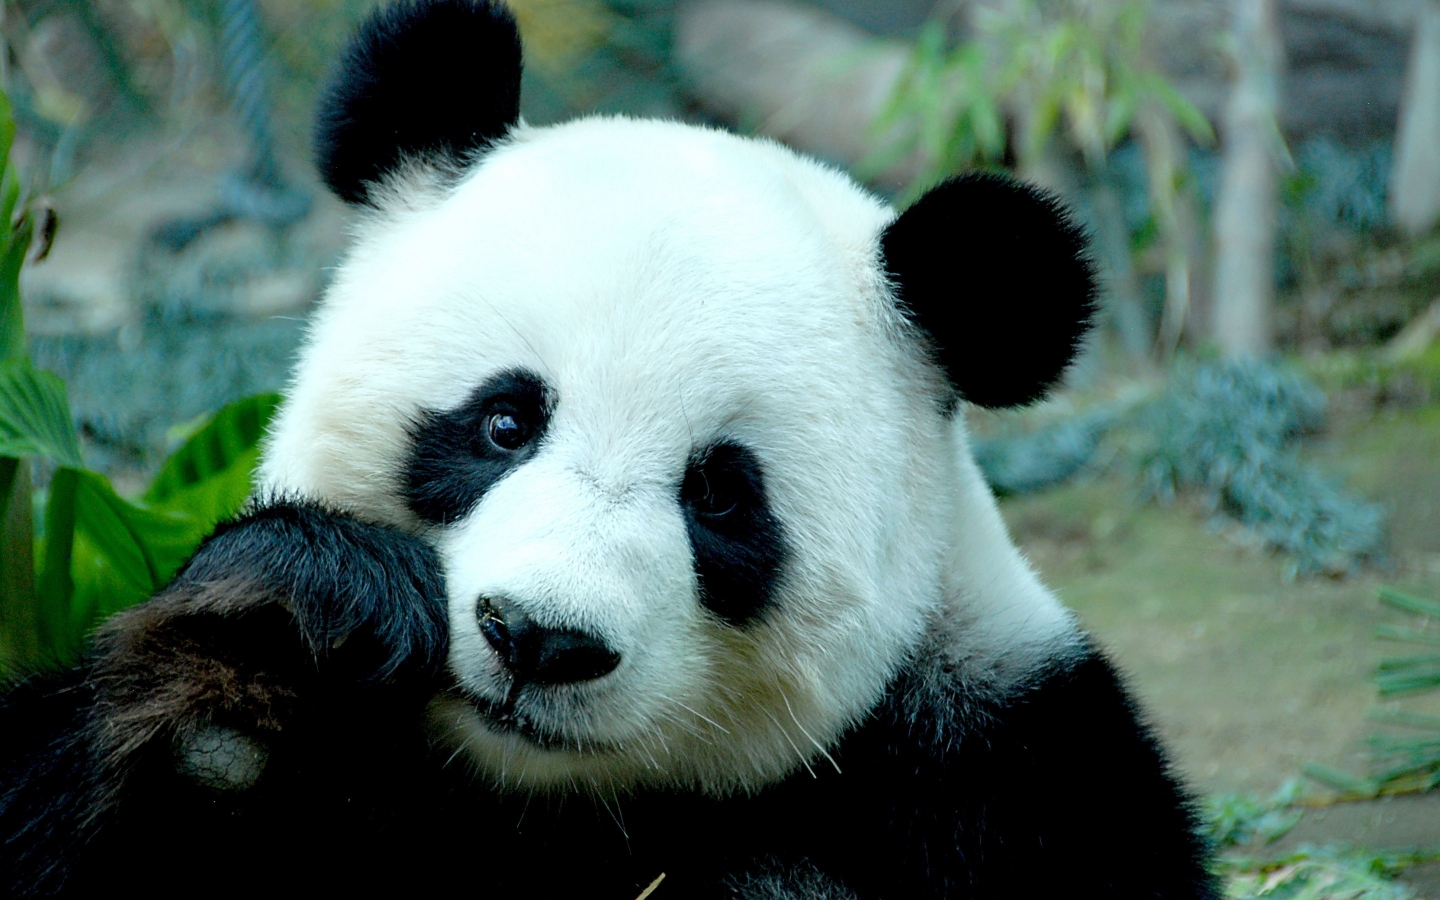 Sad Panda Bear for 1440 x 900 widescreen resolution